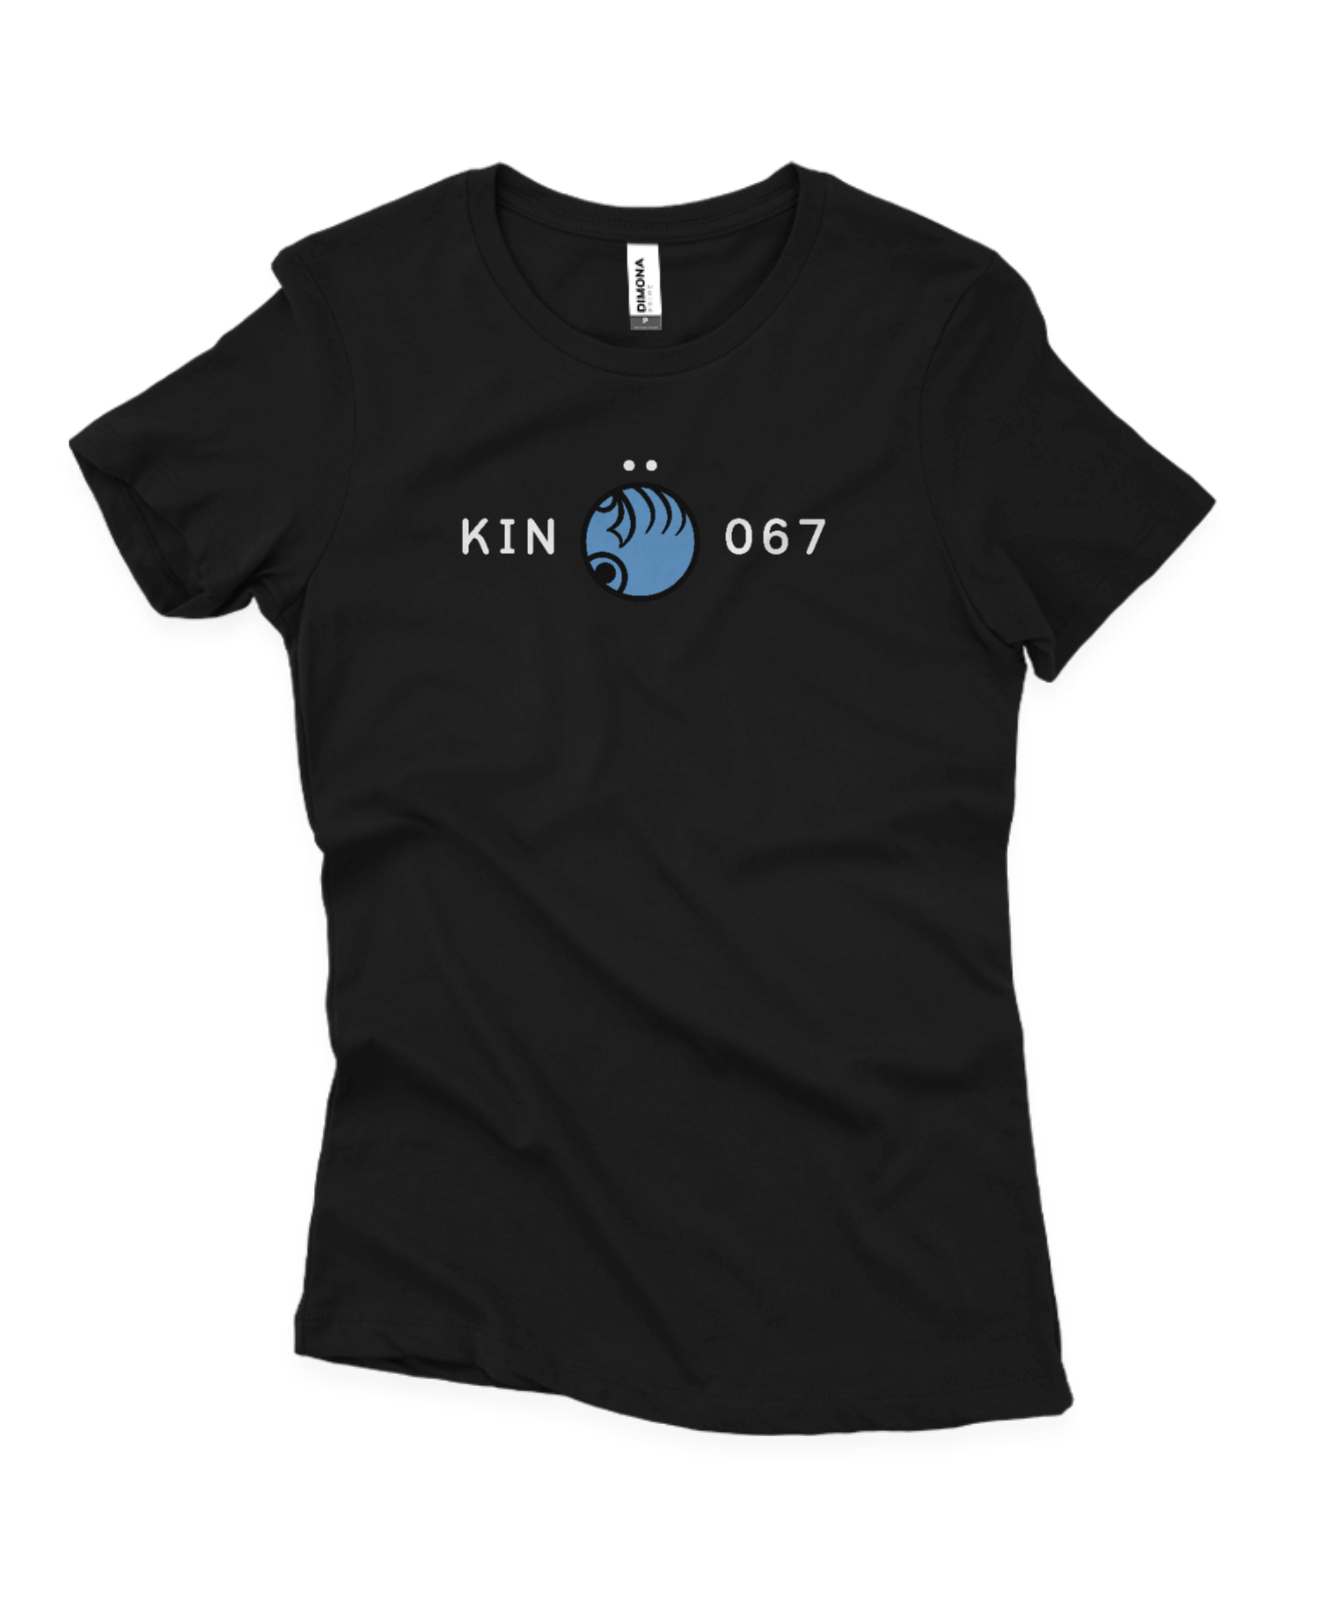 Camisa Feminina Preta Kin 067 - Mão Lunar Azul - Kin 67